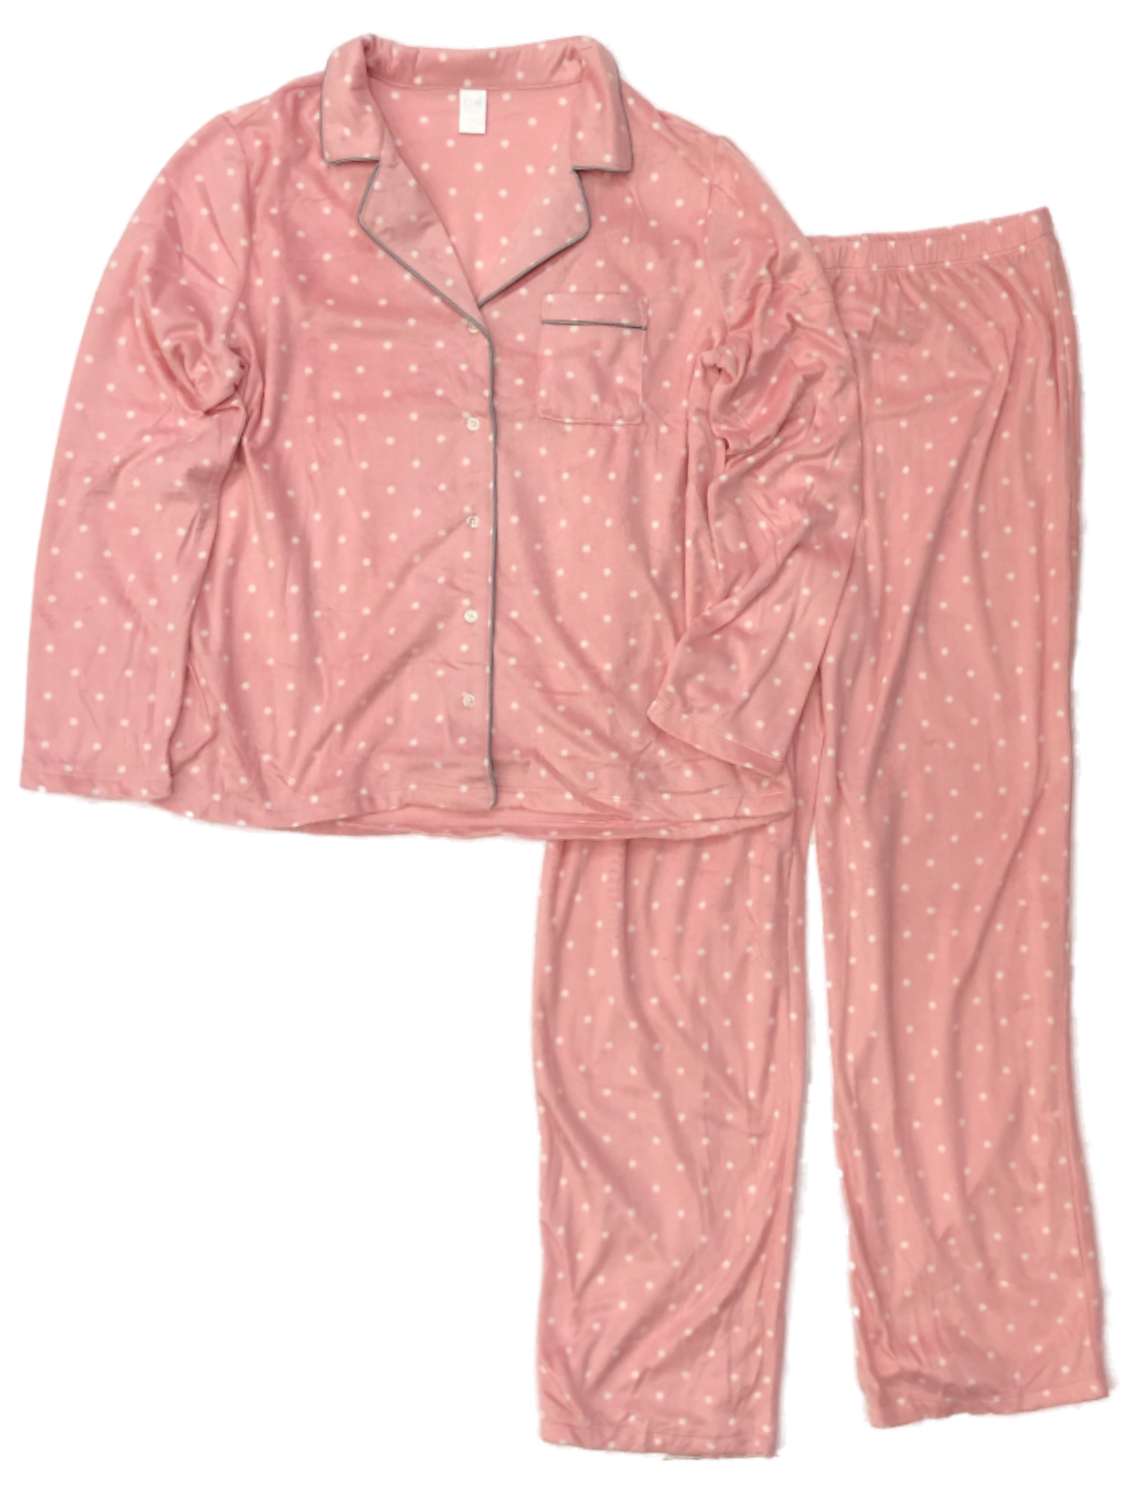 Adonna Womens Pink & White Polka Dot Fleece Pajamas Button Front Sleepwear Set